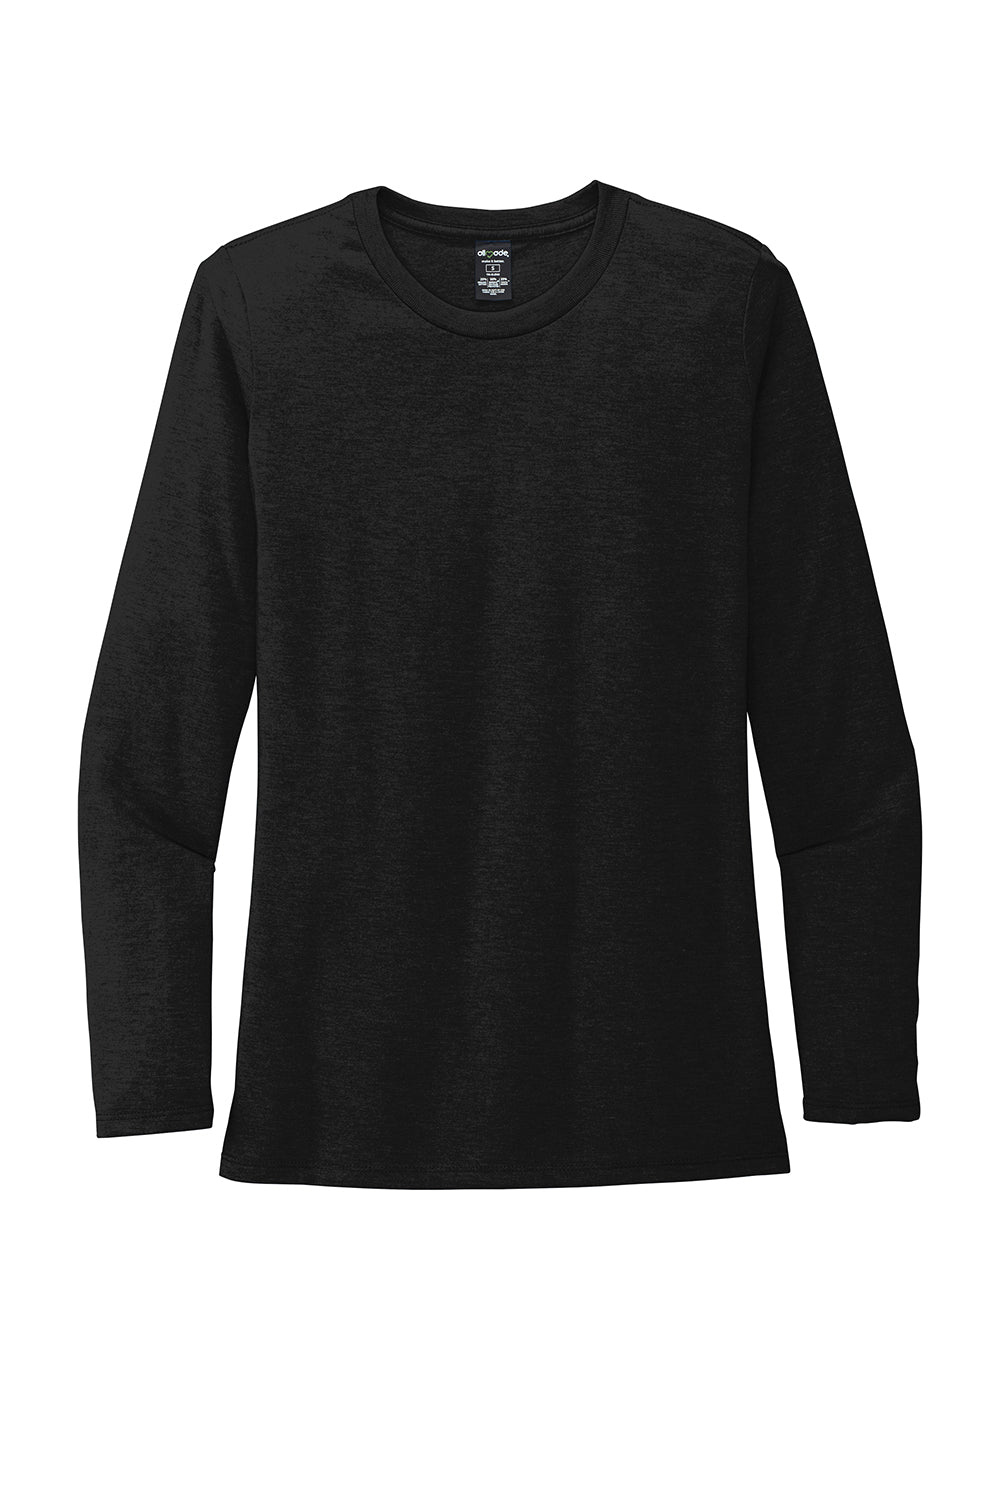 Allmade AL6008 Womens Long Sleeve Crewneck T-Shirt Space Black Flat Front